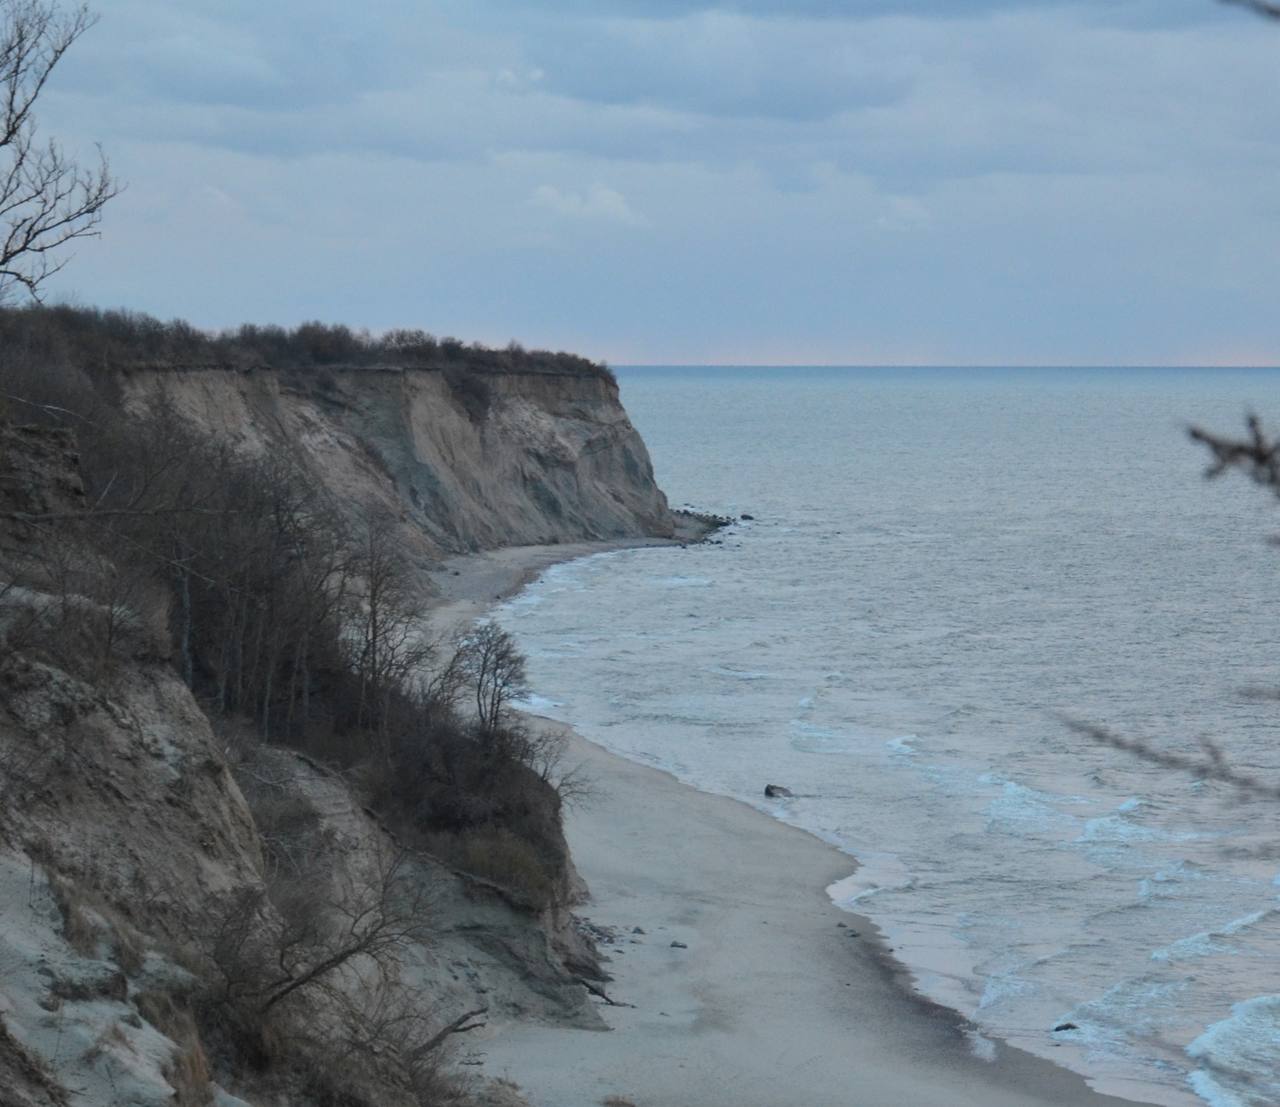 Балтийское море у побережья Калининградской области прогрелось до +15 градусов